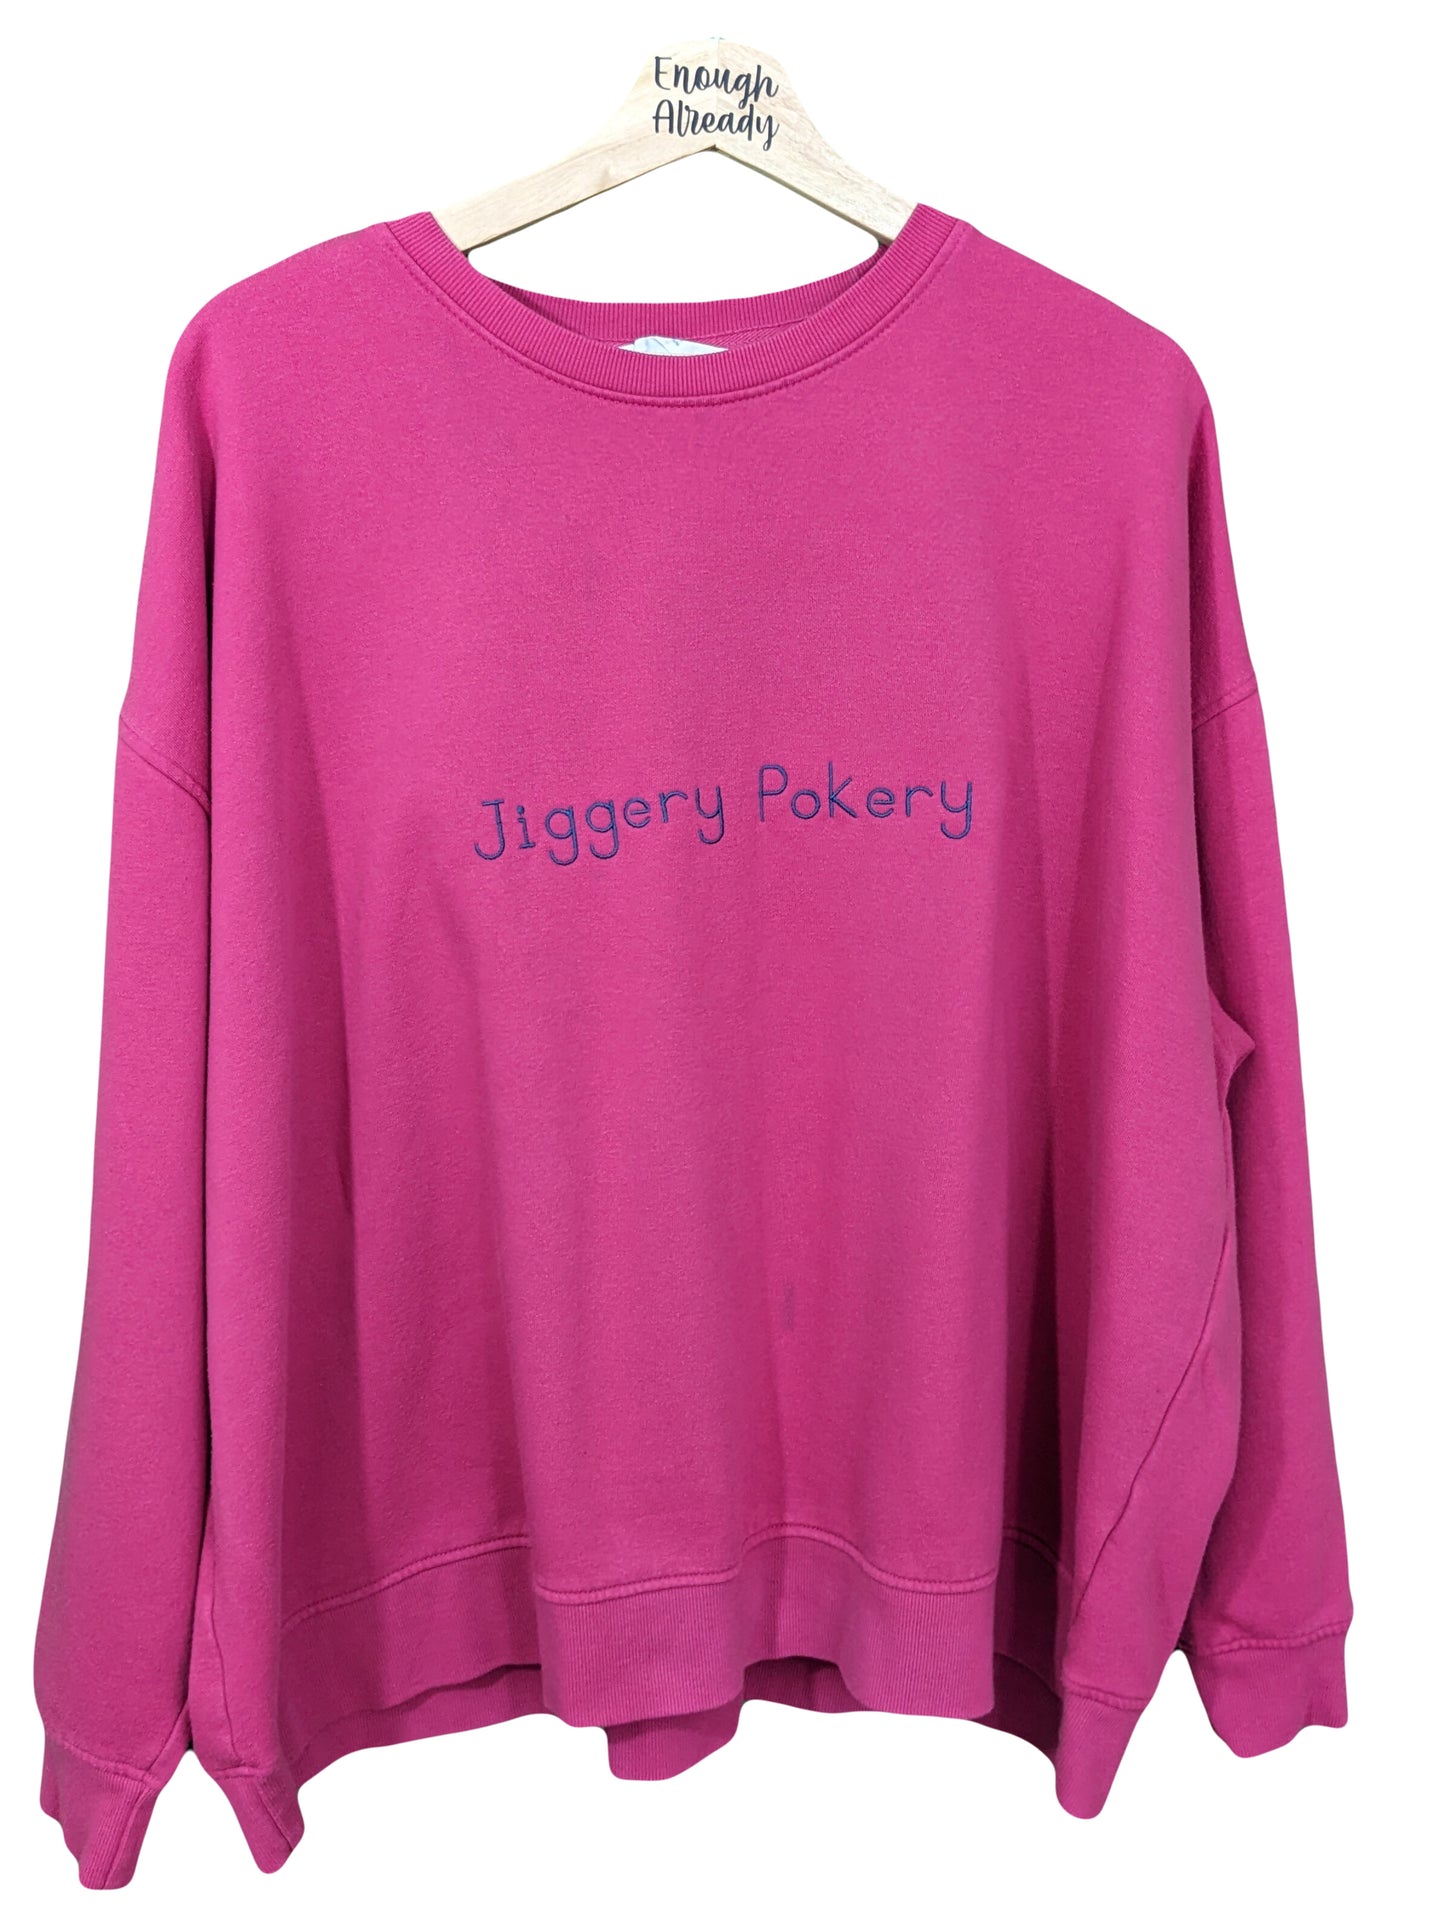 Size 22-24 Hot Pink Reworked Sweatshirt Embroidered Kooky English Word 'Jiggery Pokery' Eco Clothing